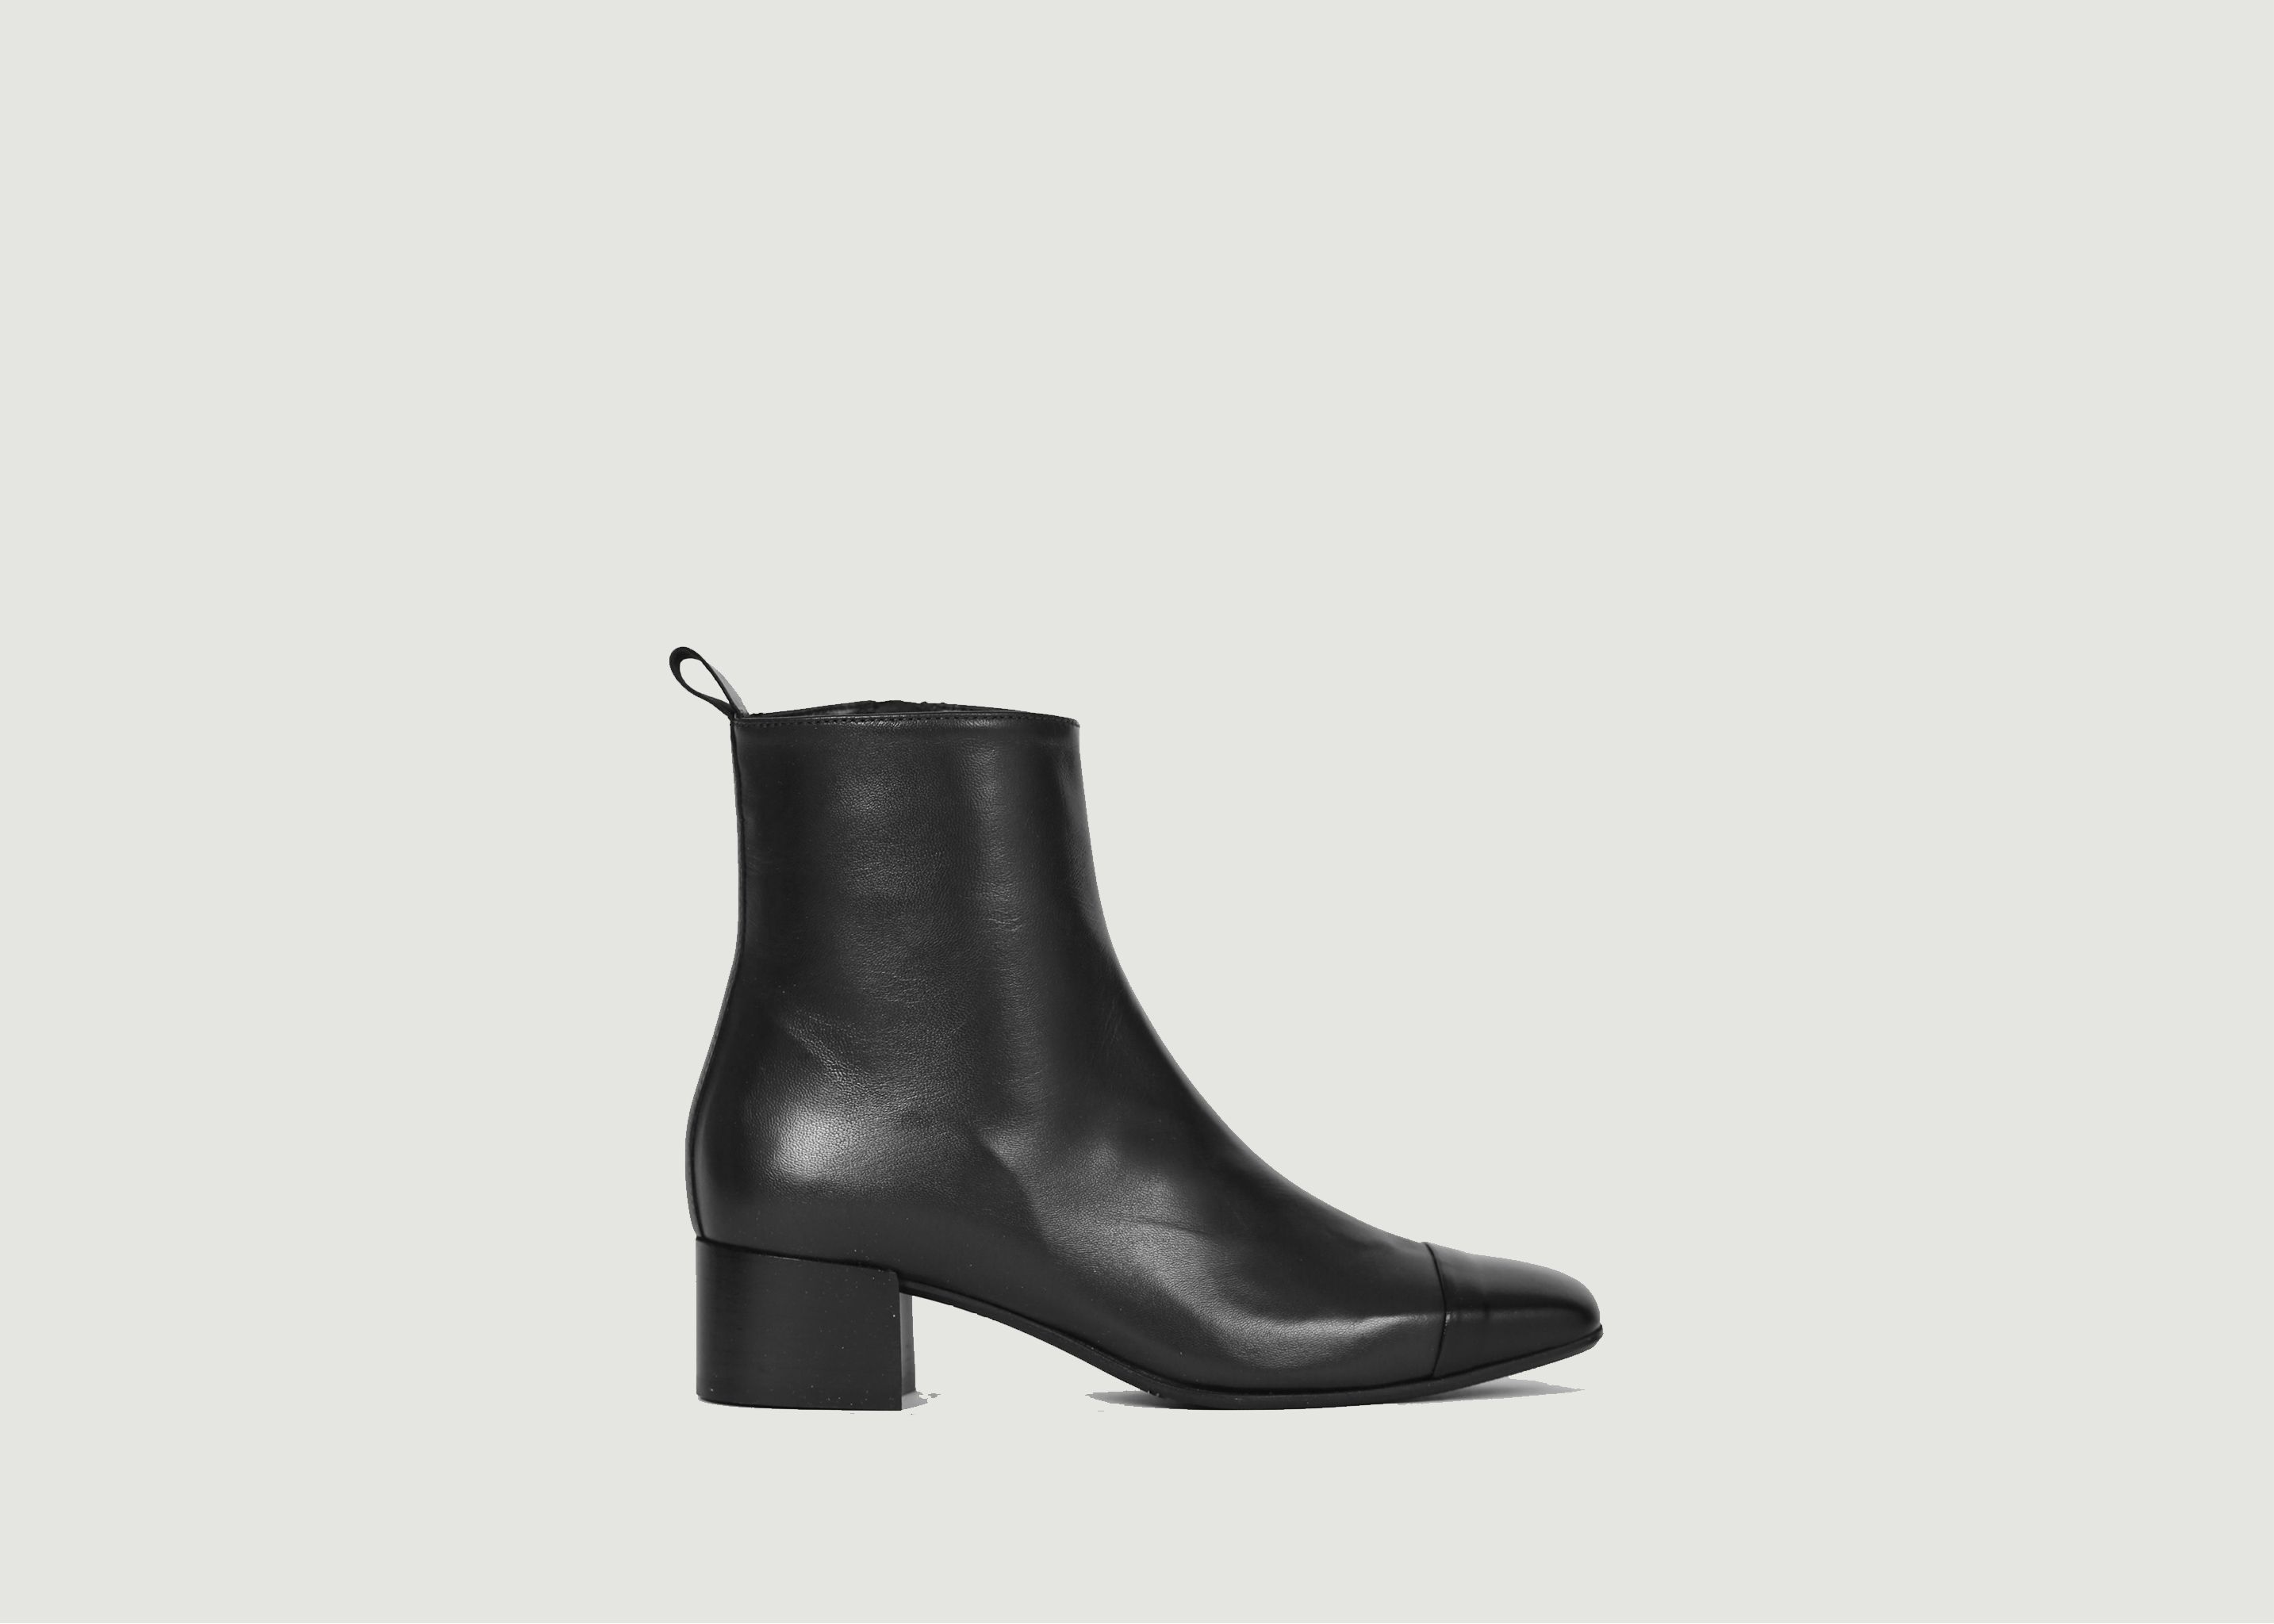 ESTIME black patent leather ankle boots